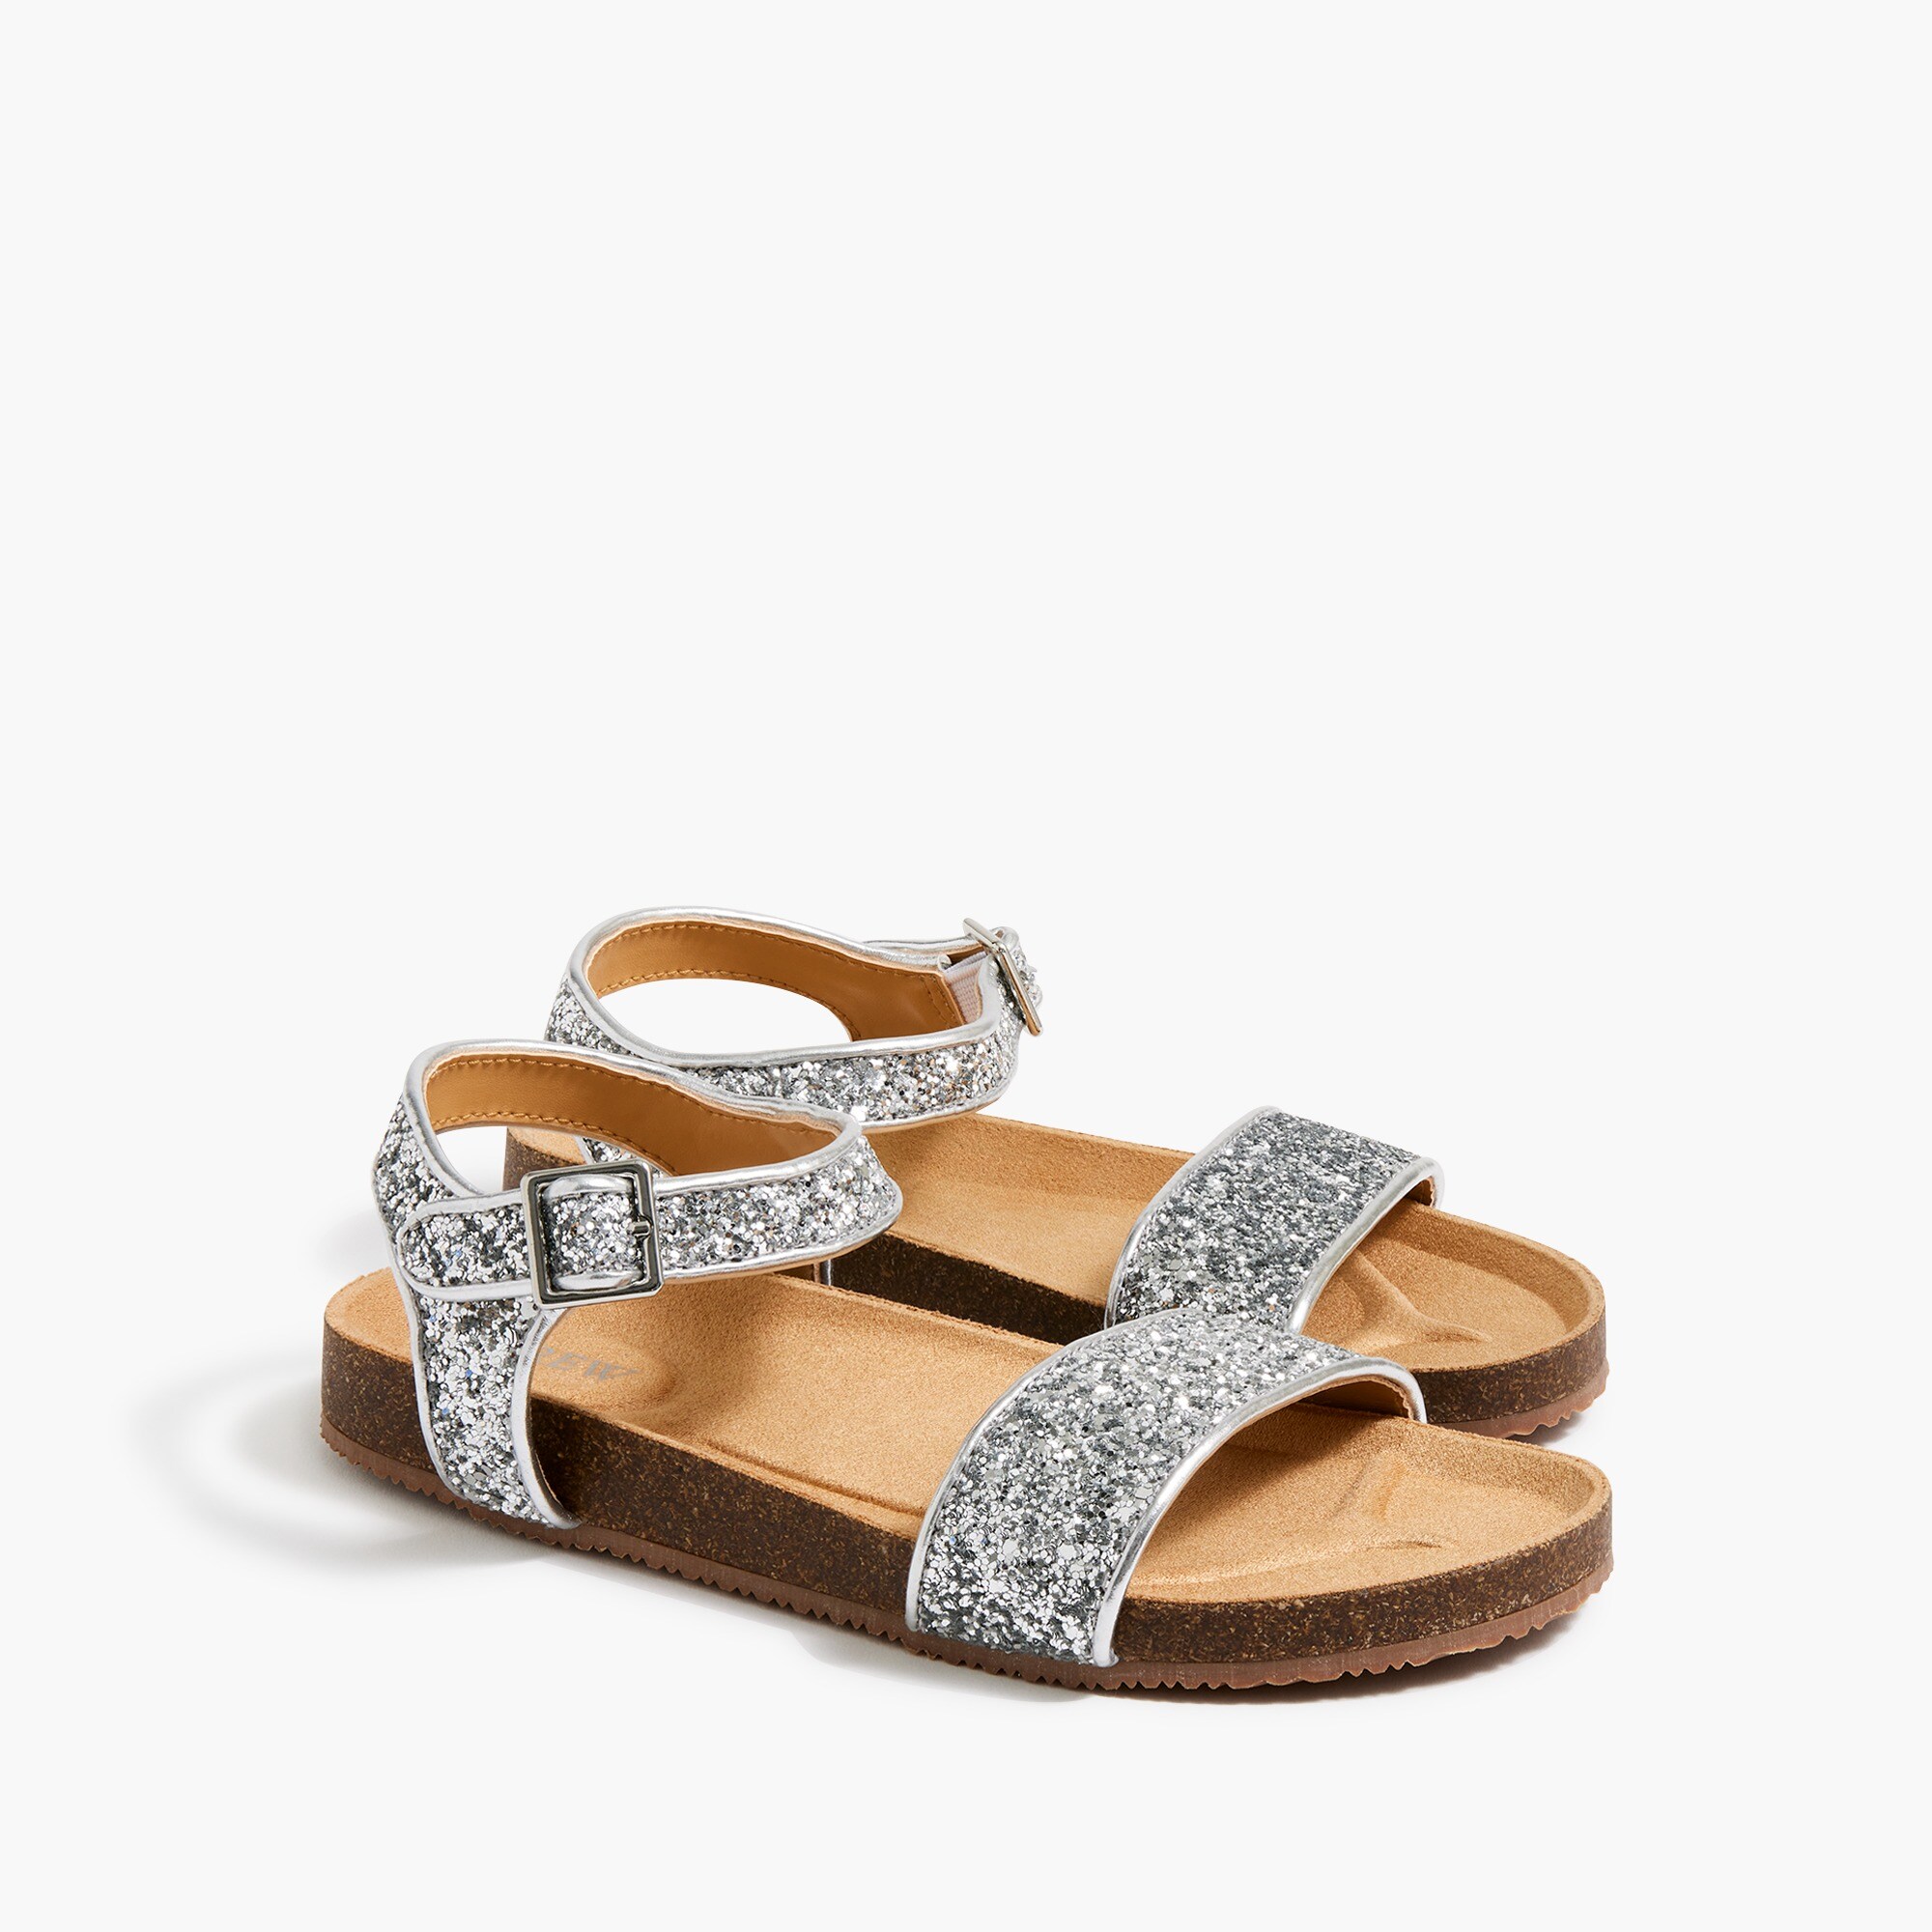  Girls' glitter buckle sandals